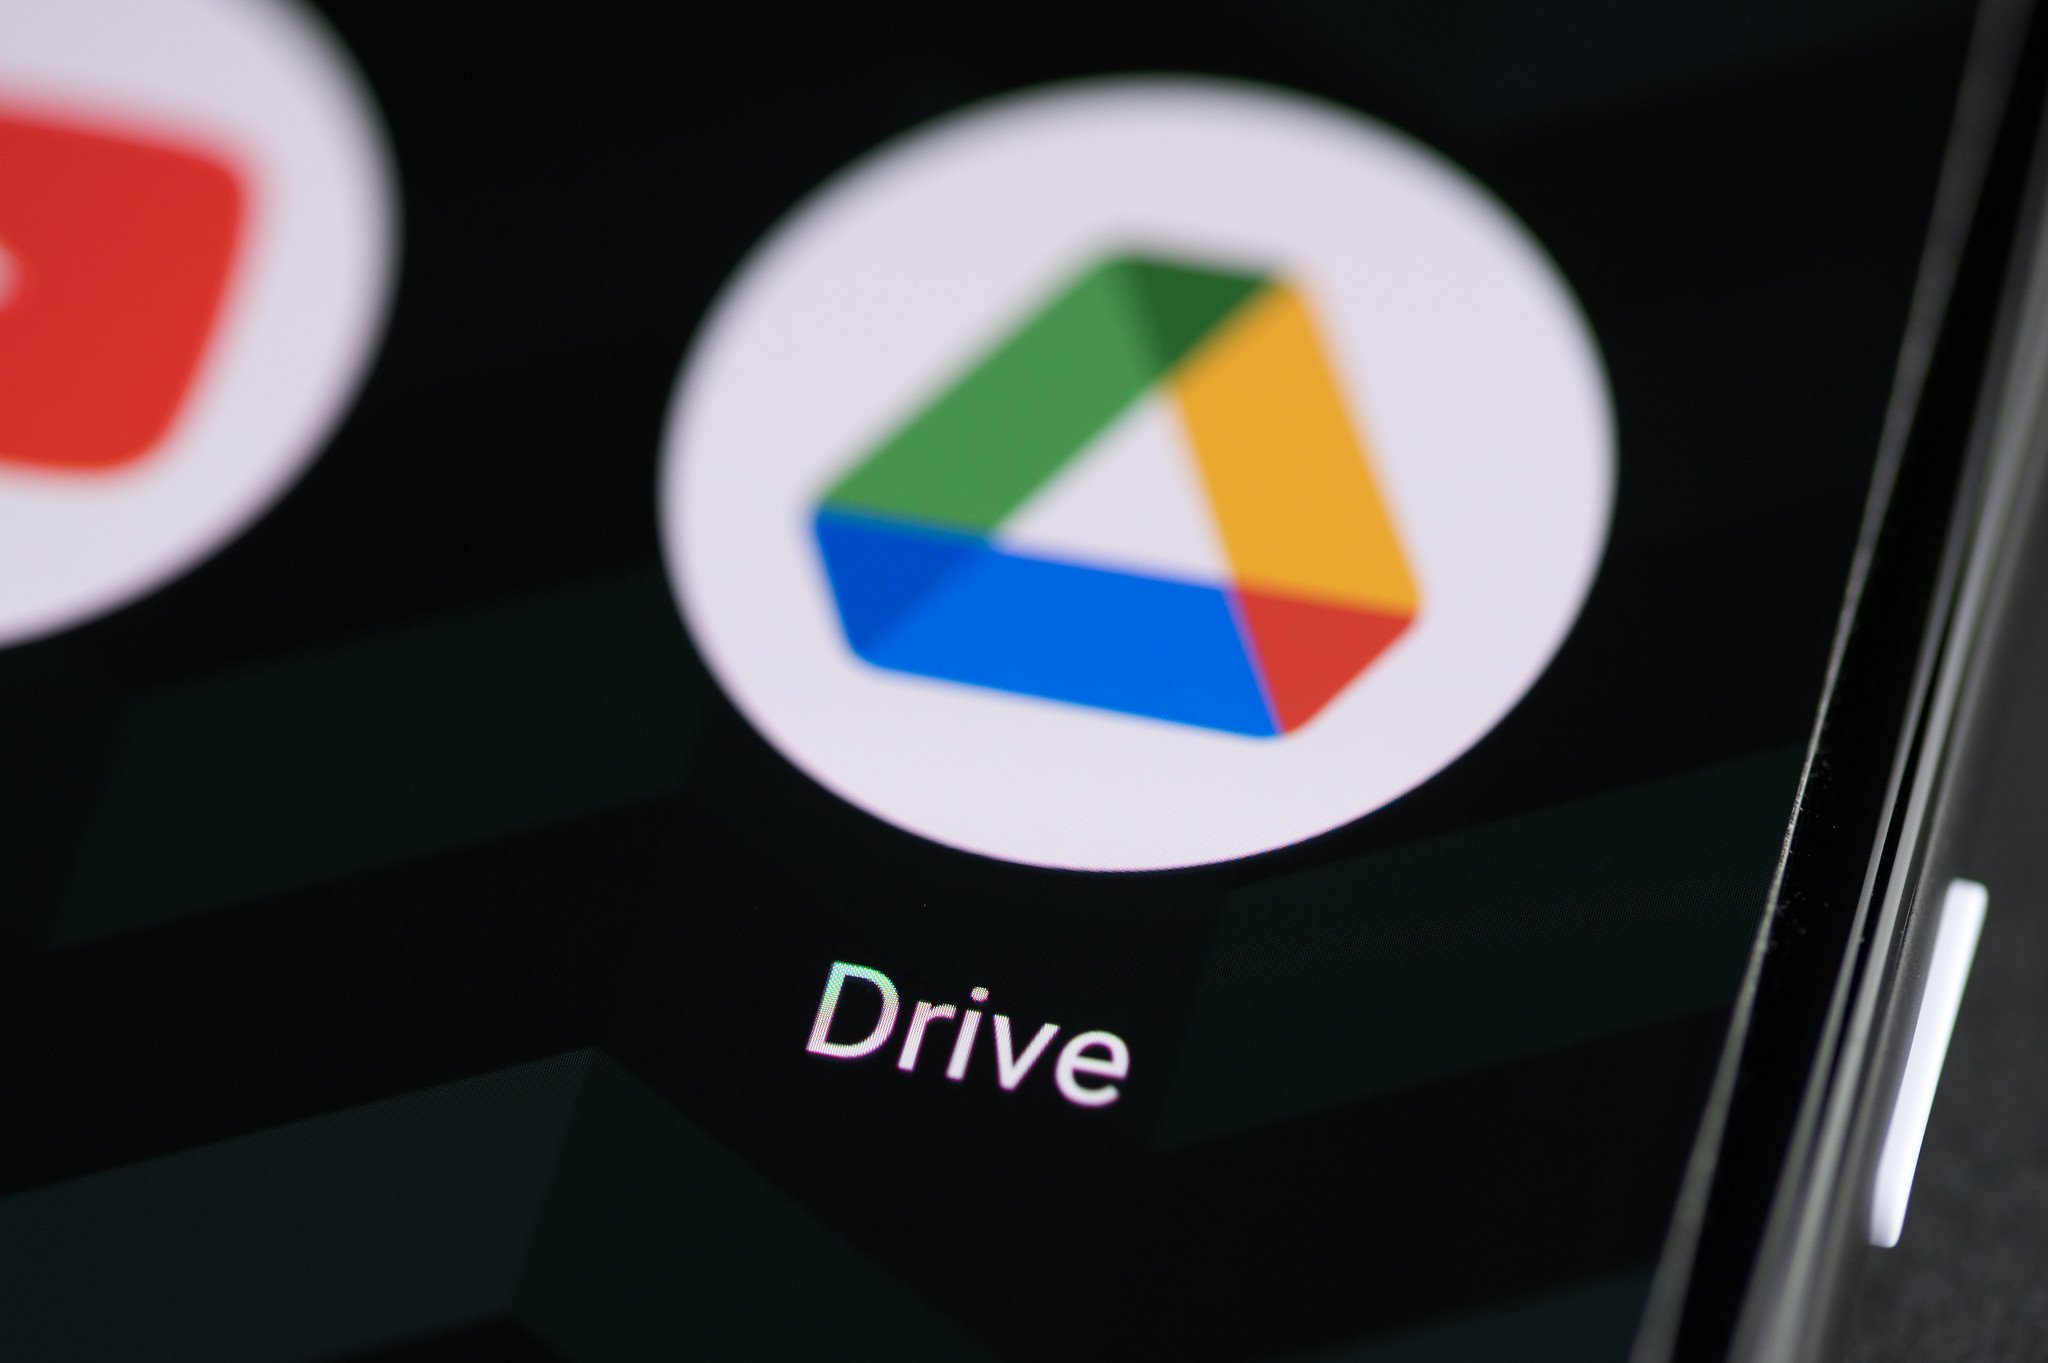 Oito recursos úteis e pouco conhecidos do Google Drive